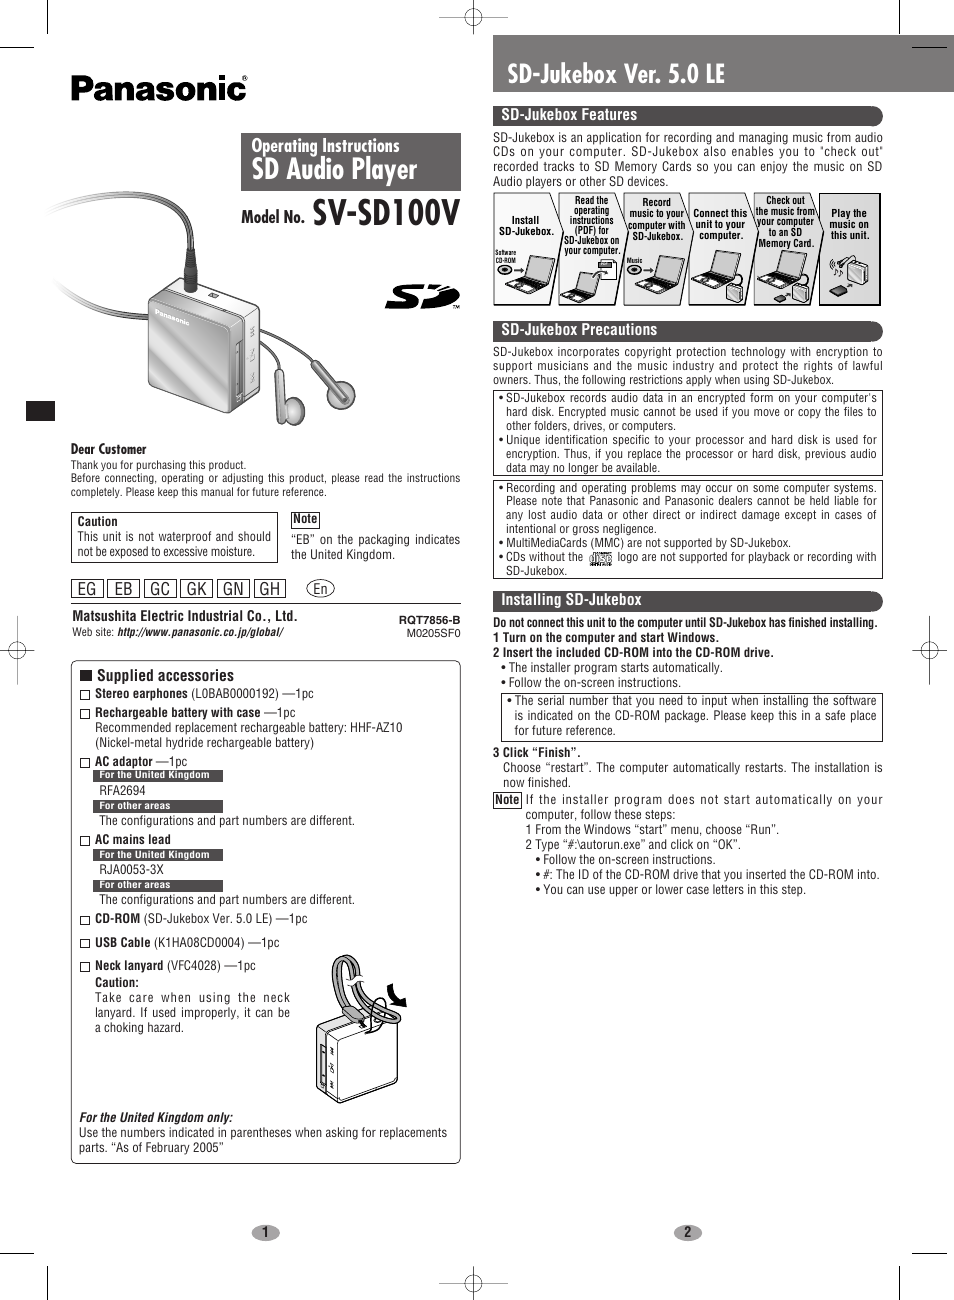 Panasonic EG EB GC GK GN GH En User Manual | 8 pages